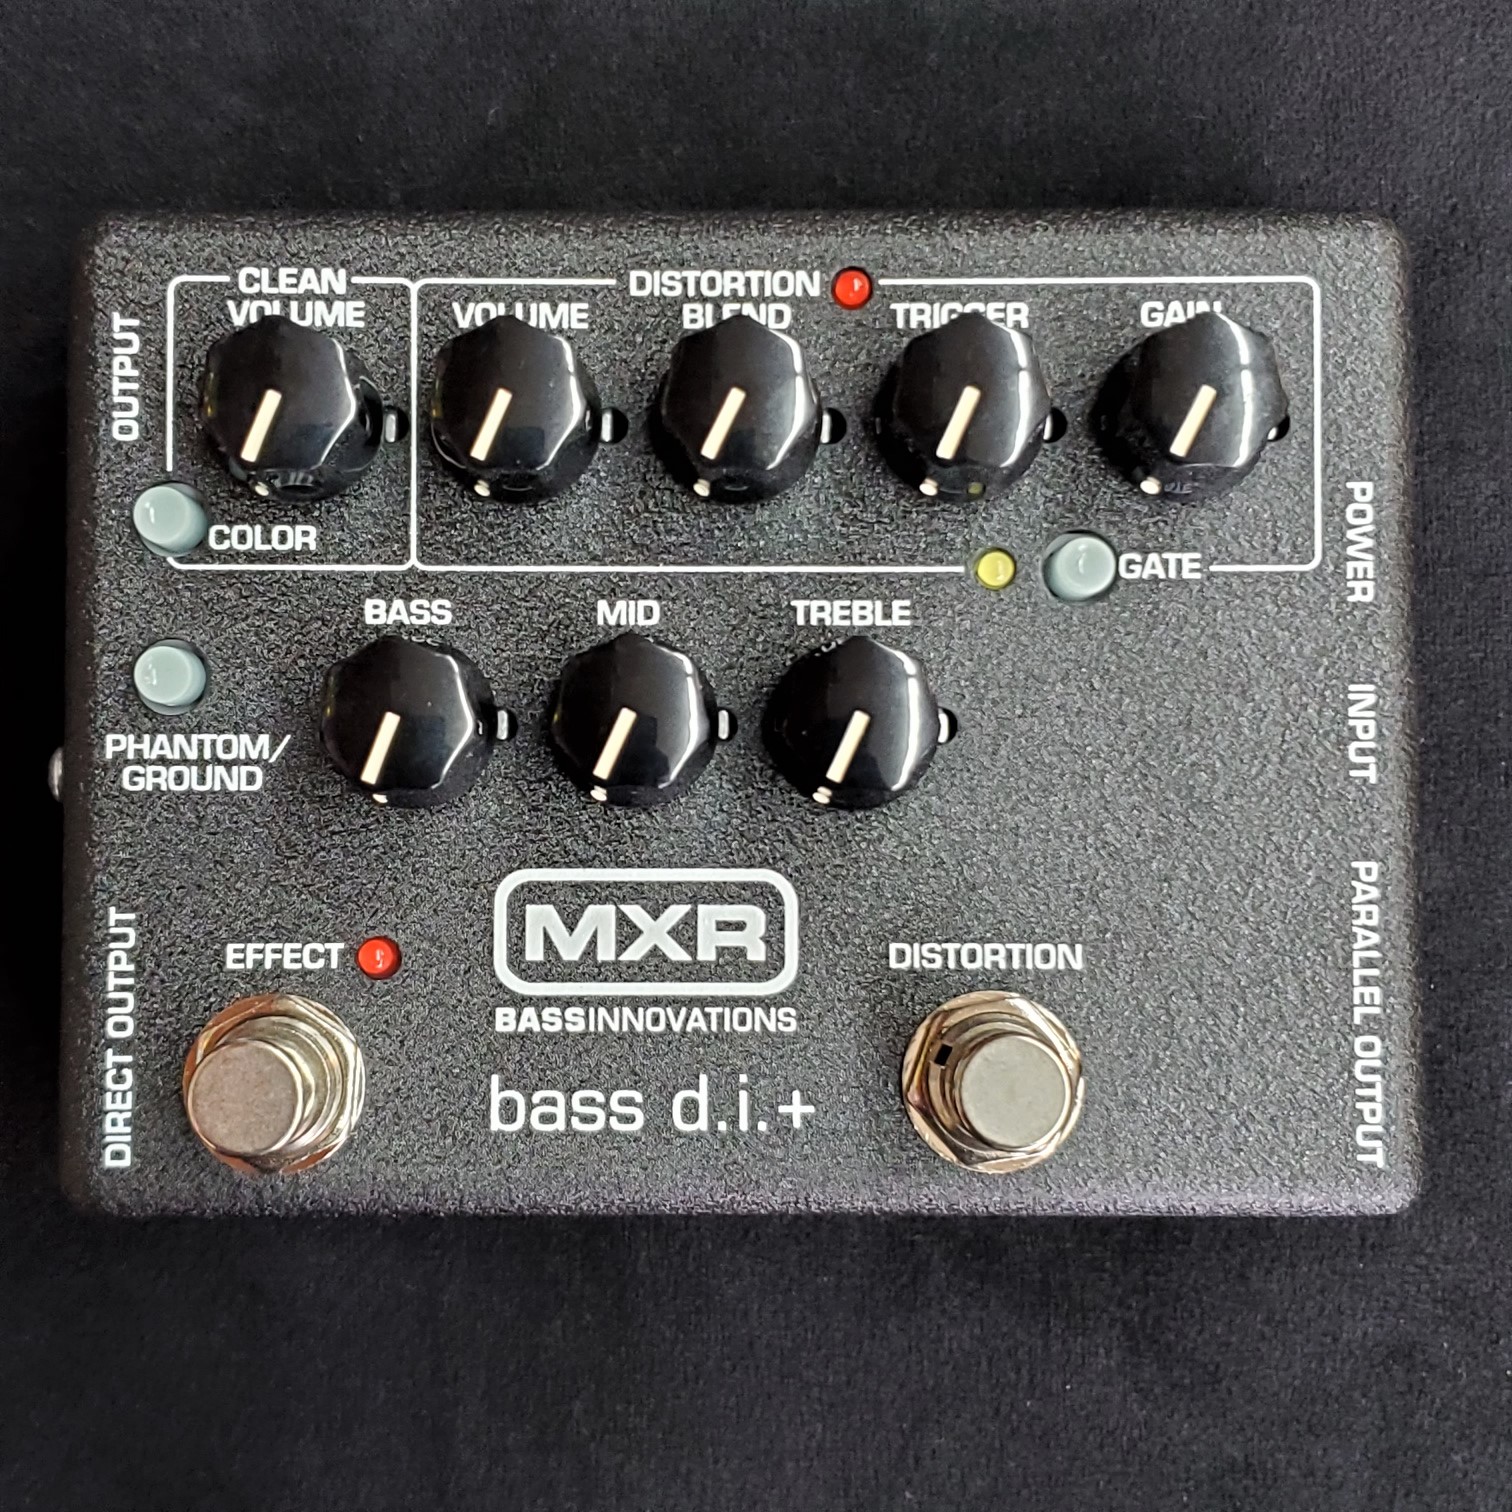 Bass DI+ from MXR - M80